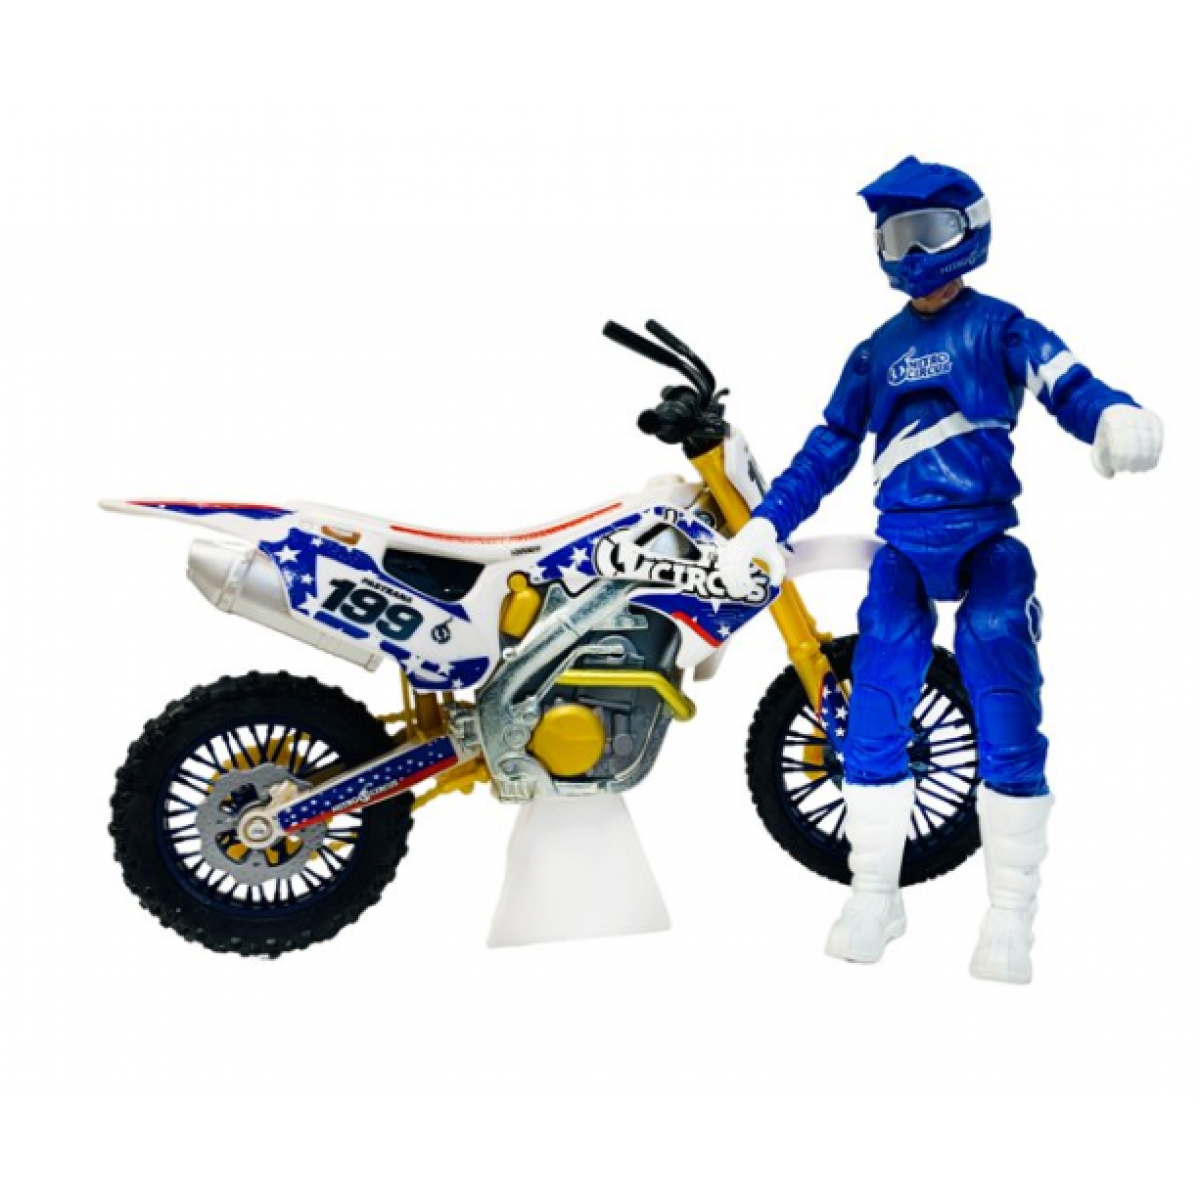 Adventure Force Nitro Circus Dirt Bike & Rider Toy